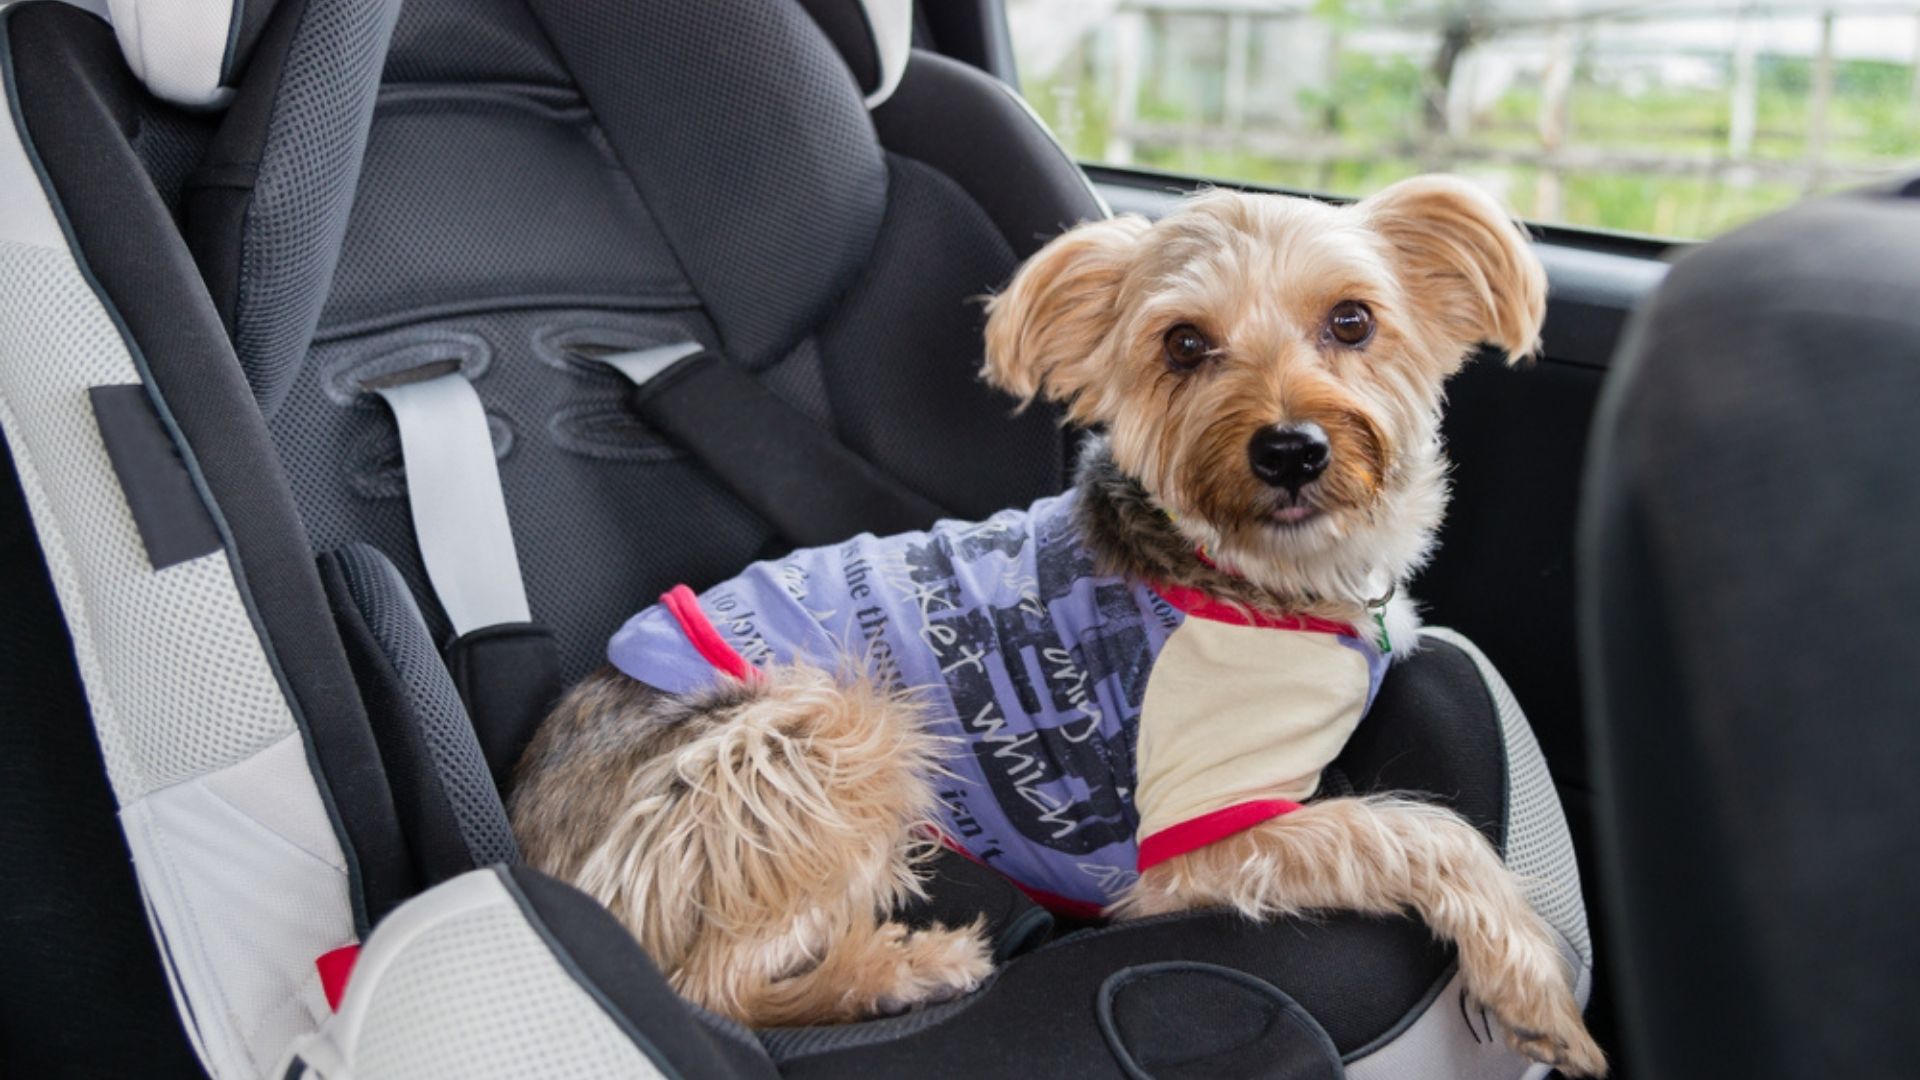 Best Dog Car Seats 2023